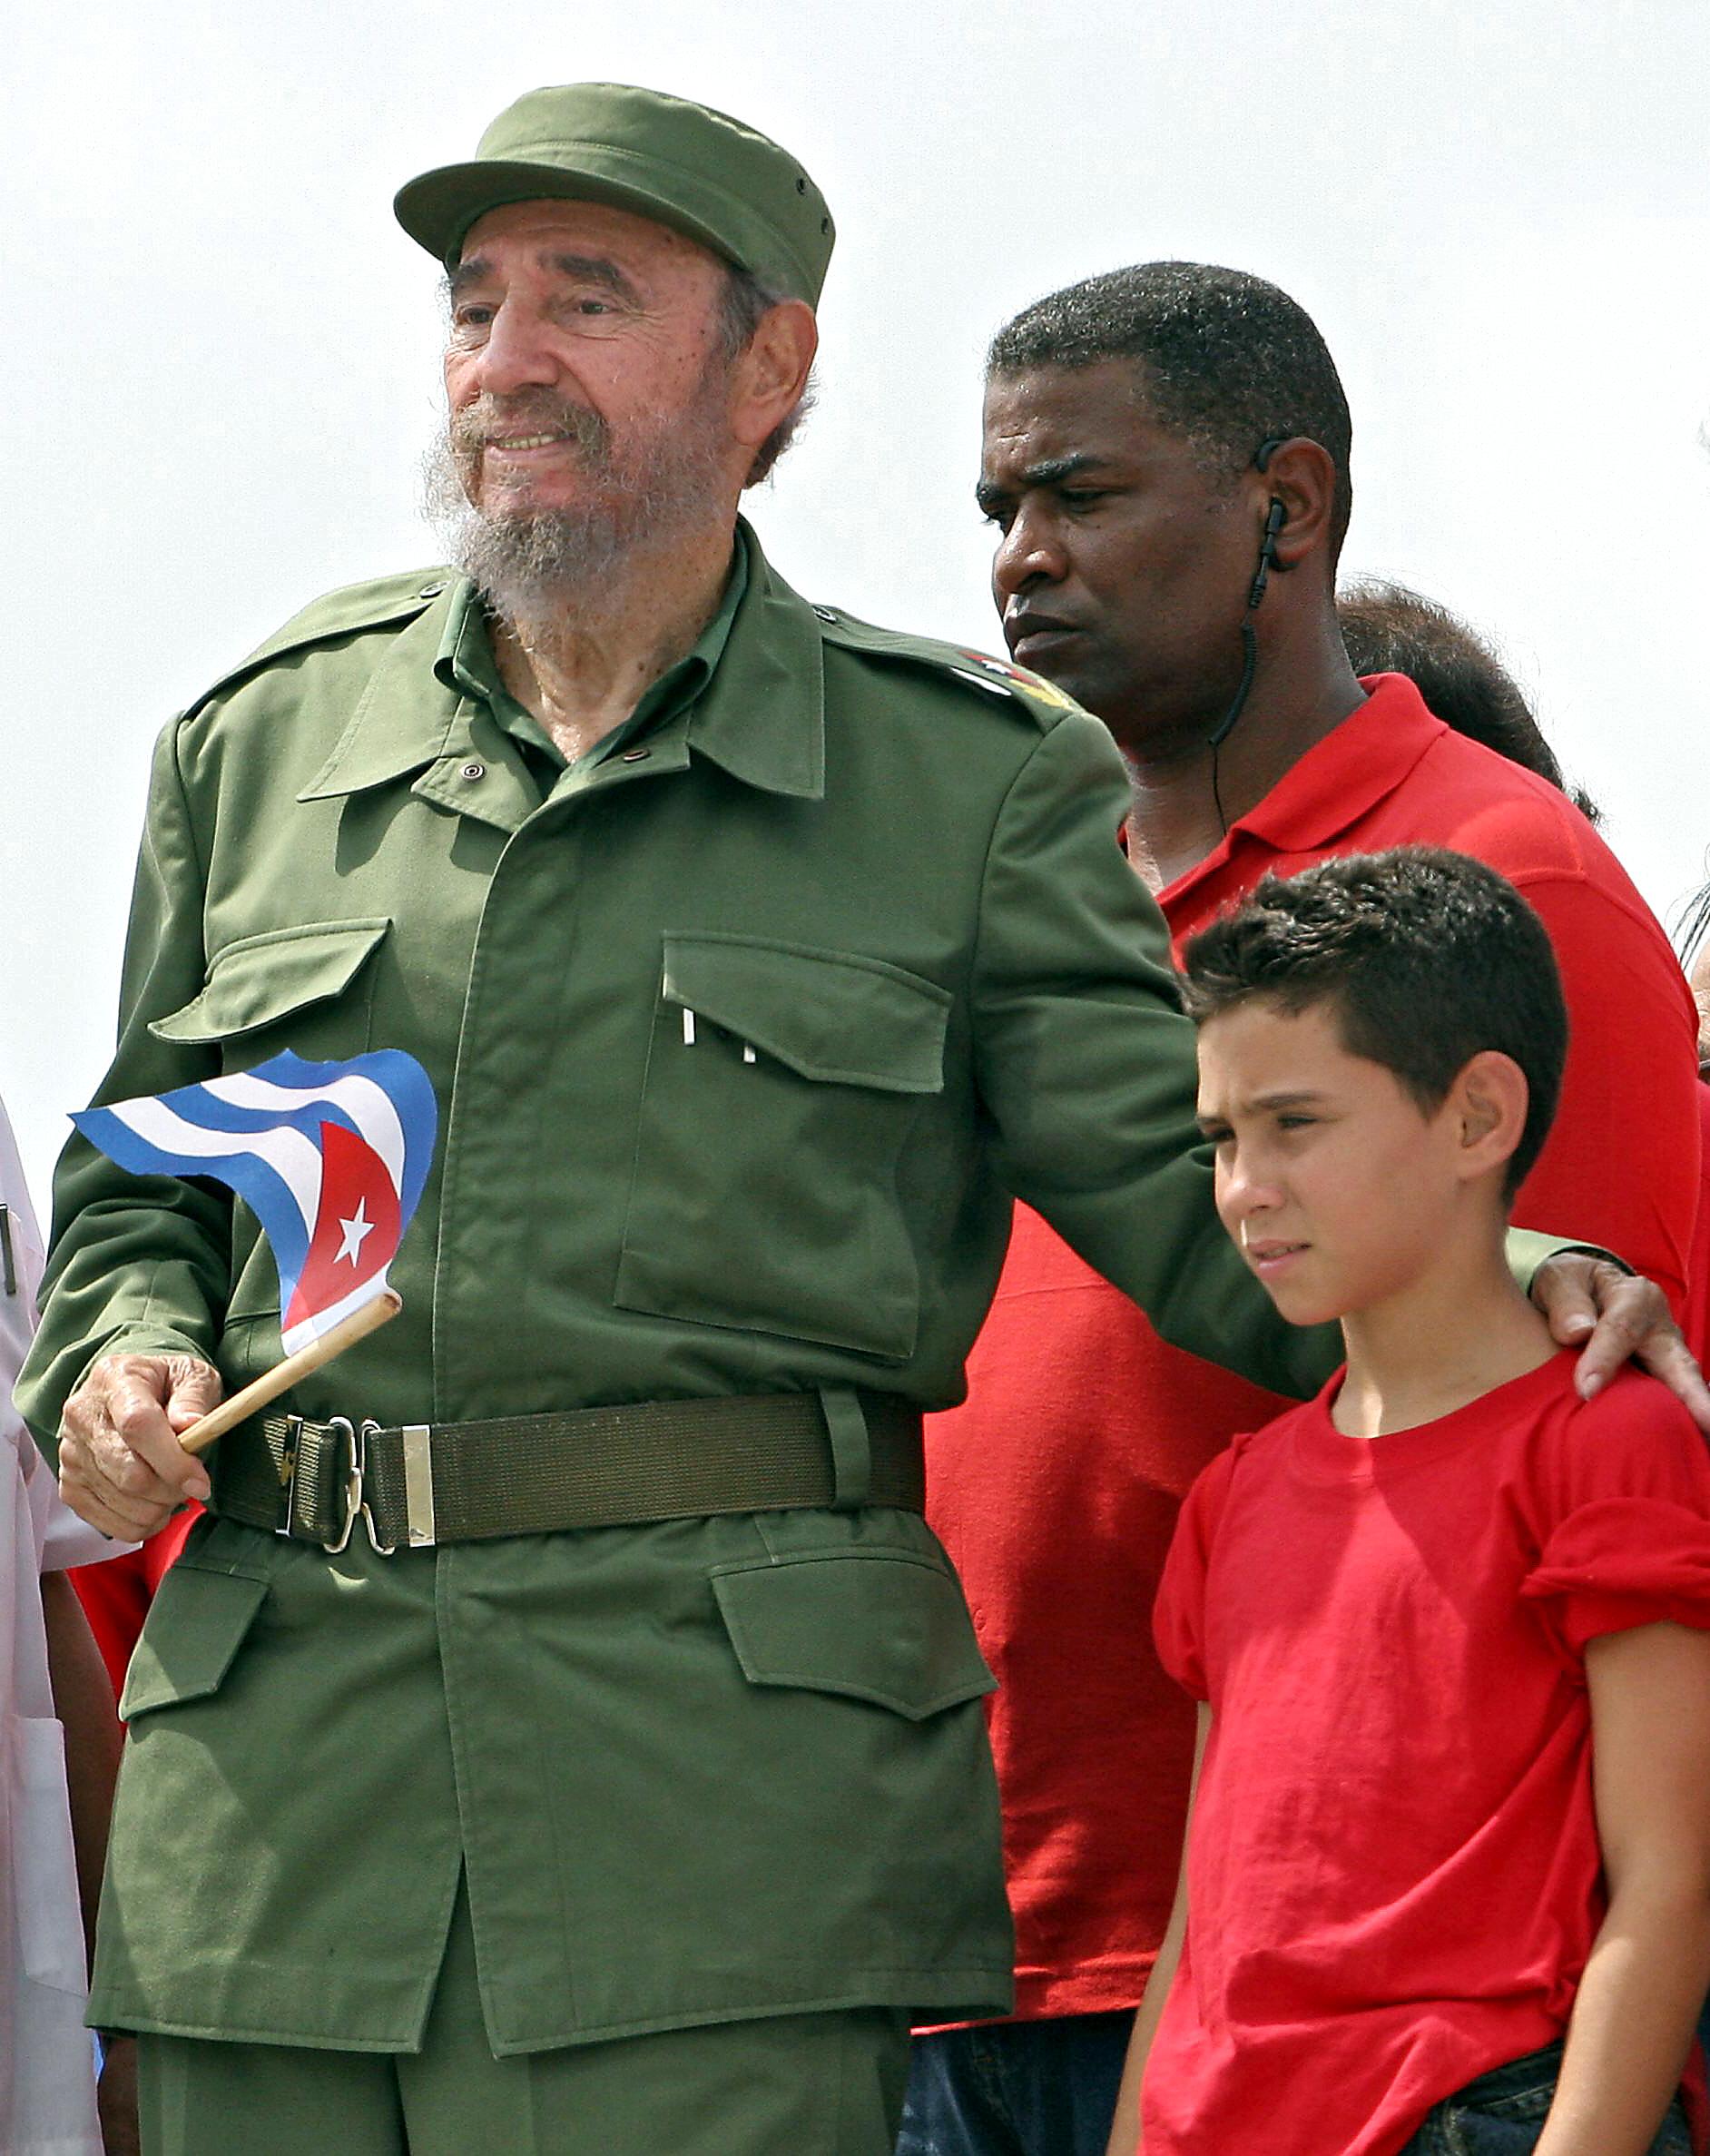 Cuban President Fidel Castro poses with shipwreck survivor Elian Gonzalez, after presiding over a massive May Day demonstration at Havana's Plaza de la Revolucion in May 2005. (ADALBERTO ROQUE/AFP/Getty Images)